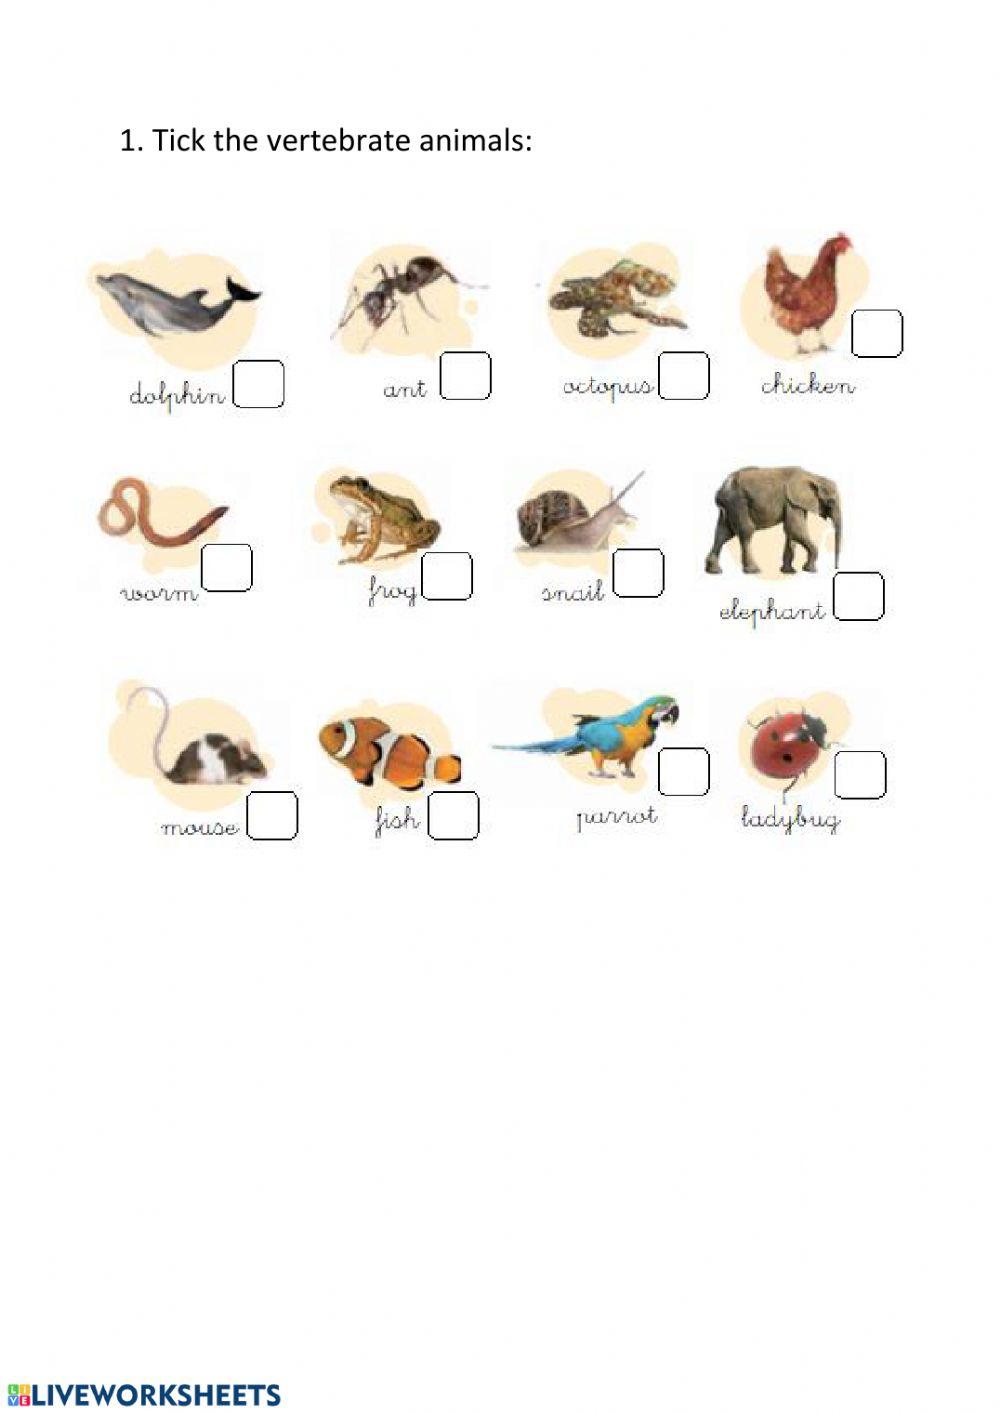 Vertebrate and invertebrate animals